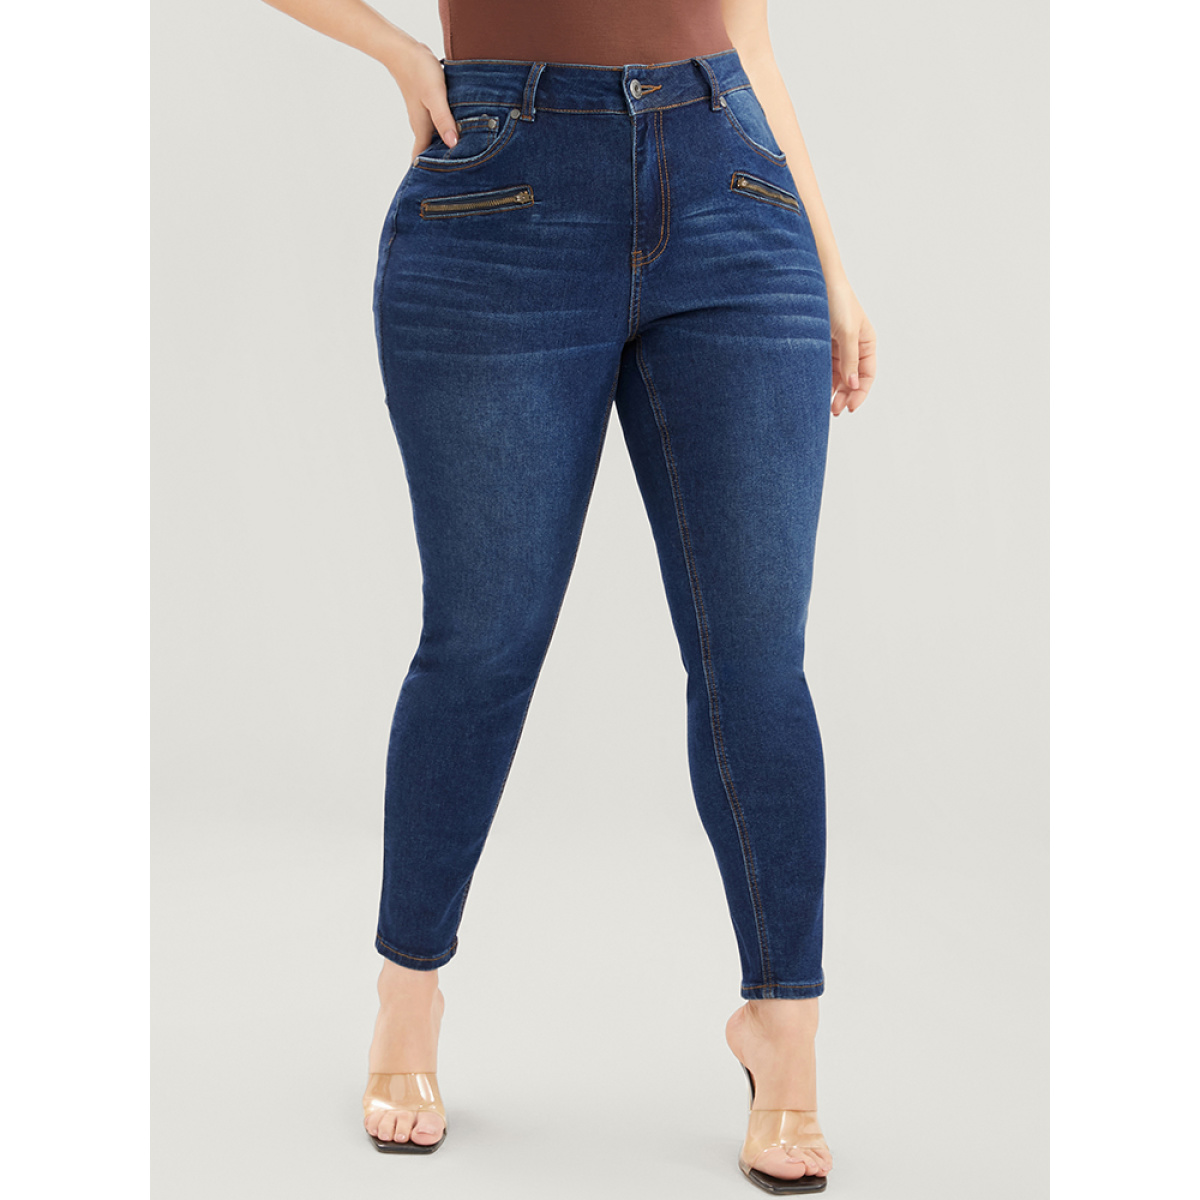 

Plus Size Skinny Slightly Stretchy High Rise Dark Wash Zipper Front Jeans Women Indigo Casual Plain Zipper Low stretch Pocket Jeans BloomChic